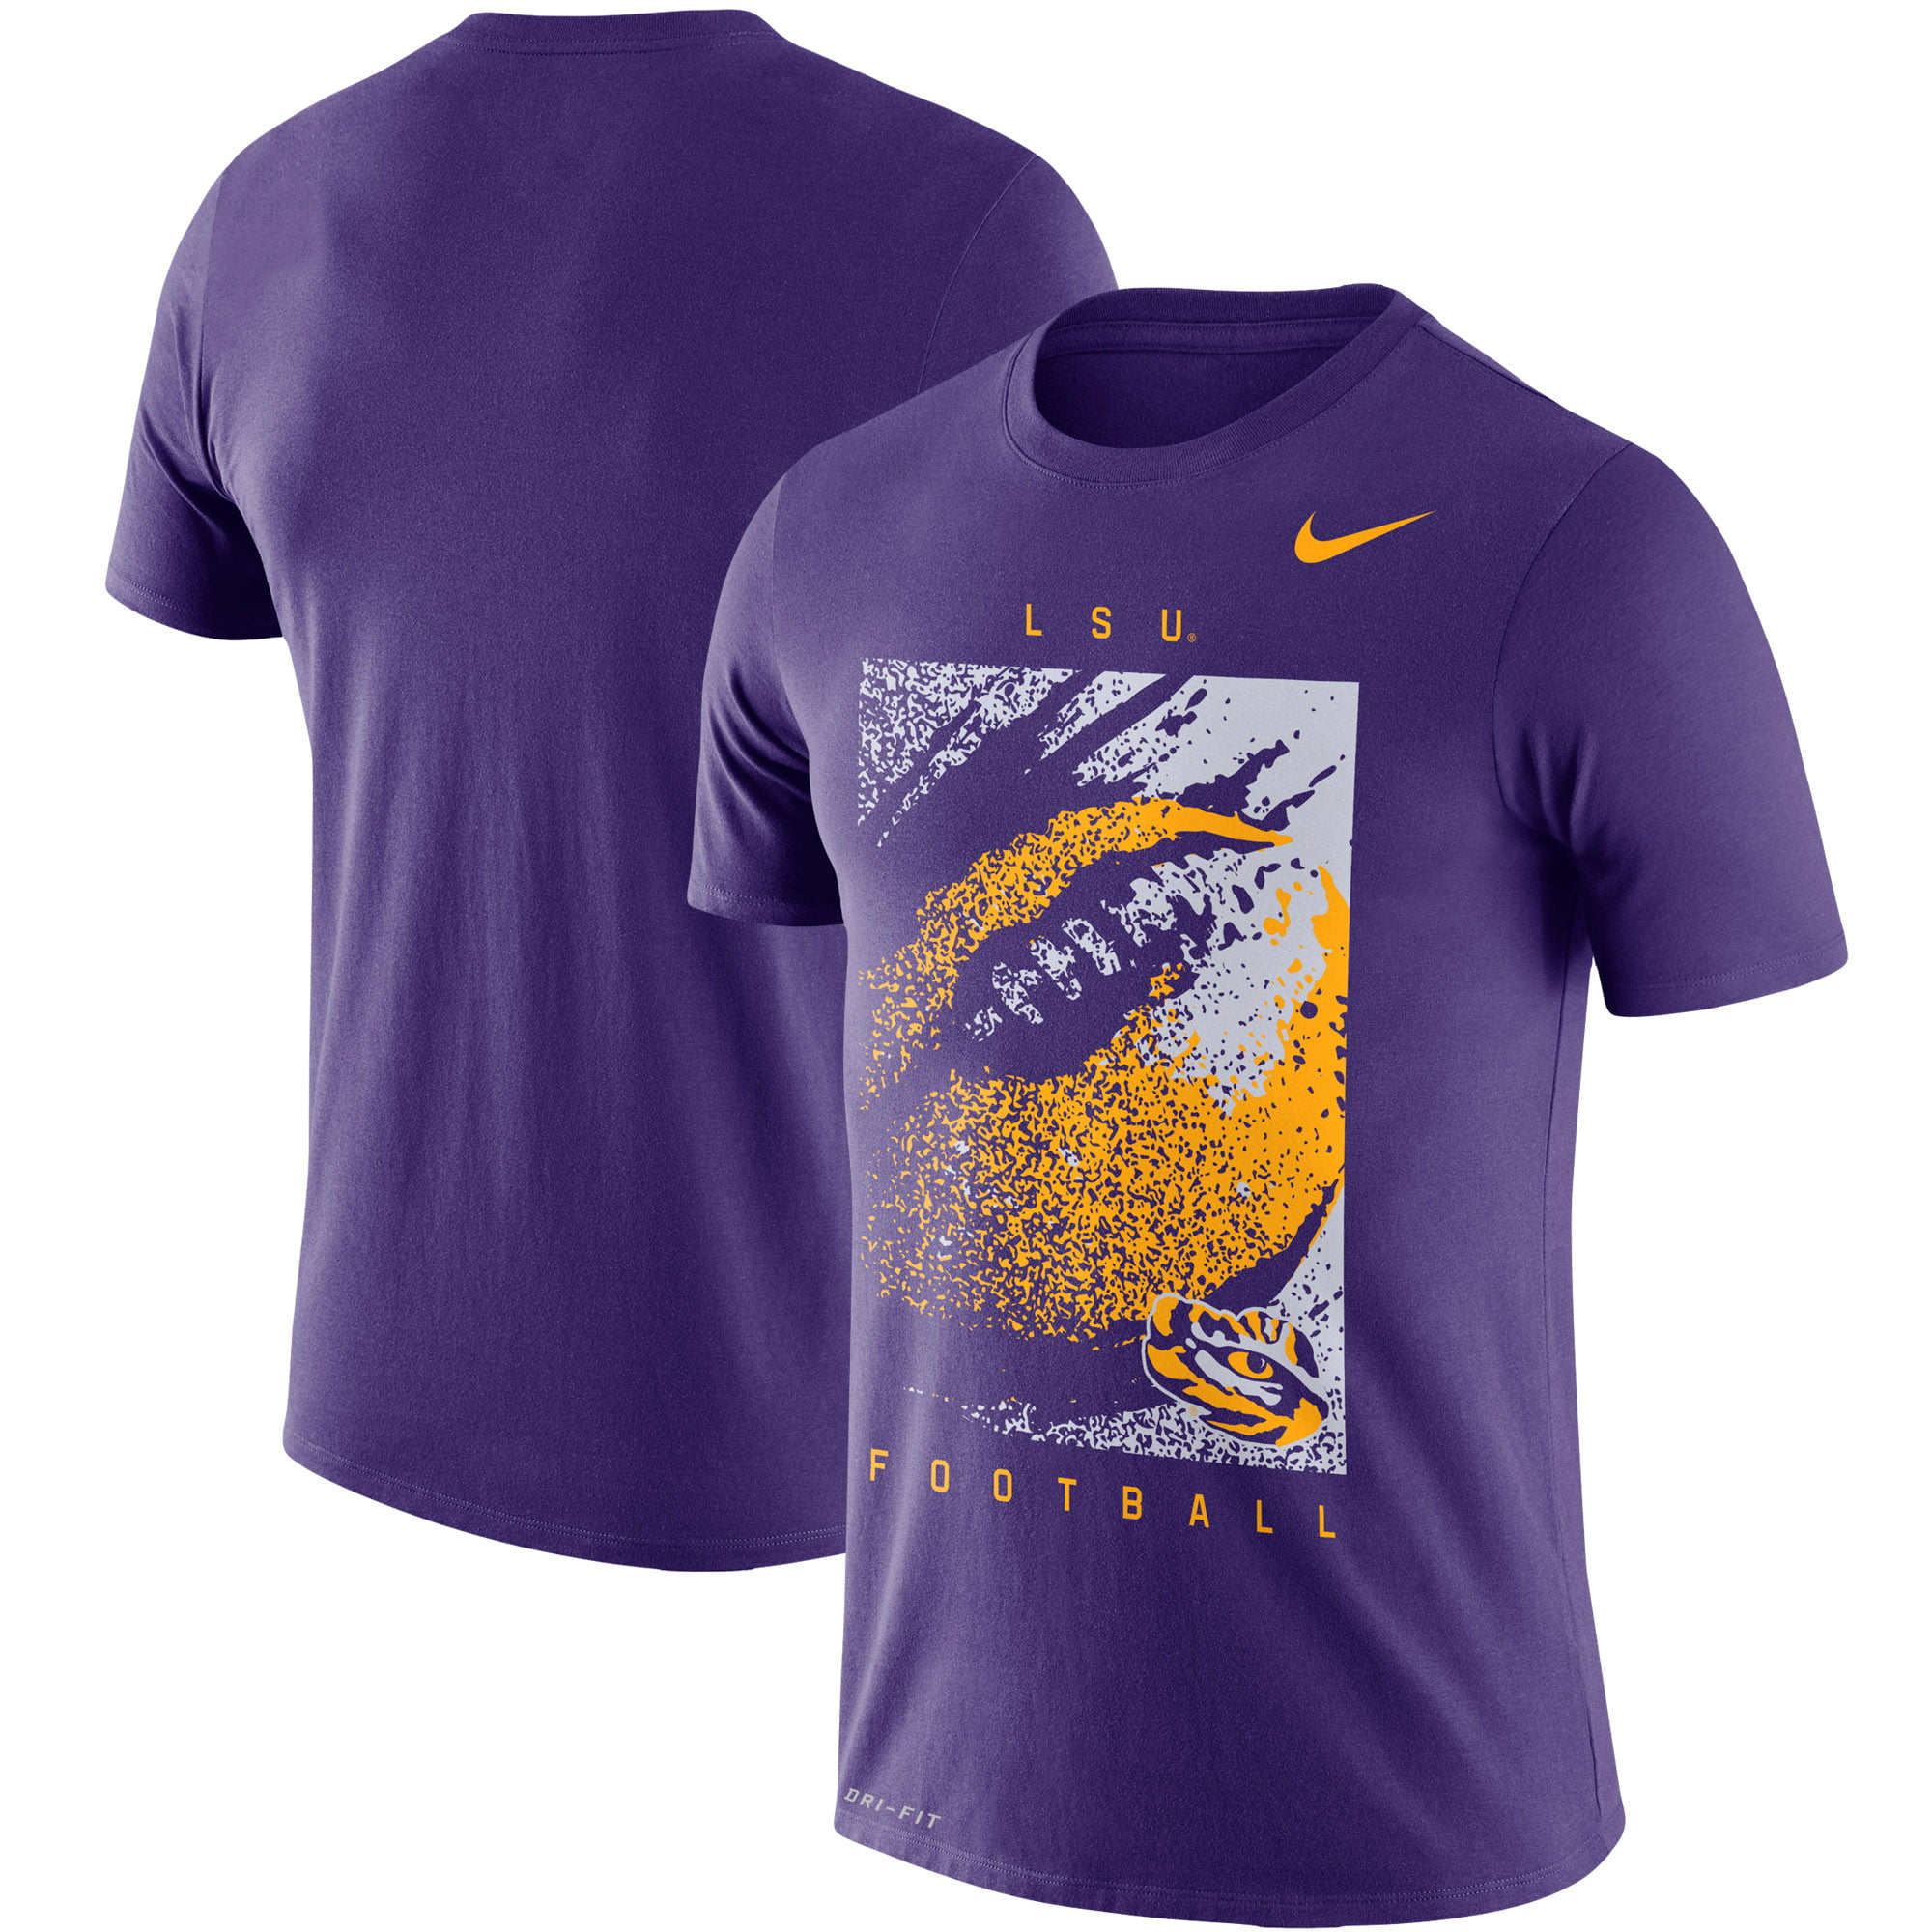 LSU Tigers Nike Football Performance T-Shirt - Purple - Walmart.com ...